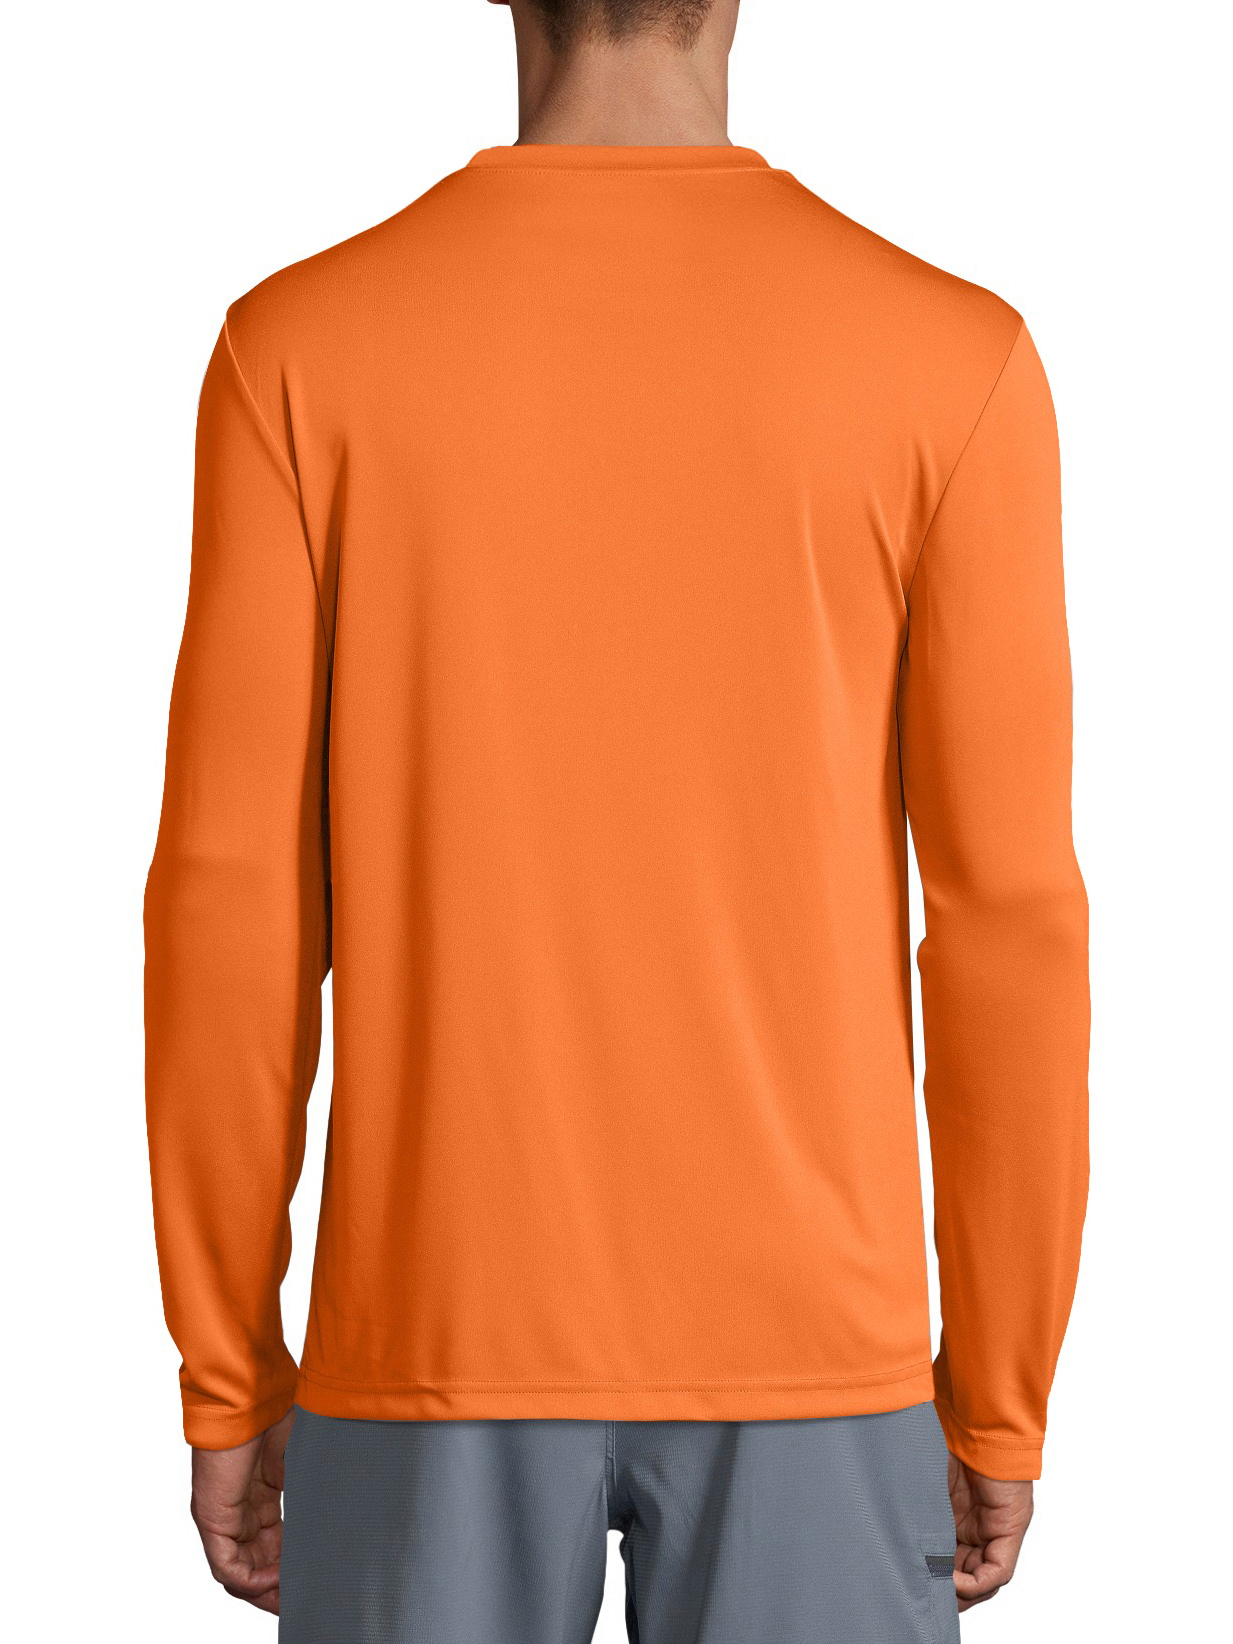 Hanes Cool DRI Performance Long-Sleeve T-Shirt (482L) Safety Orange, M - image 4 of 7